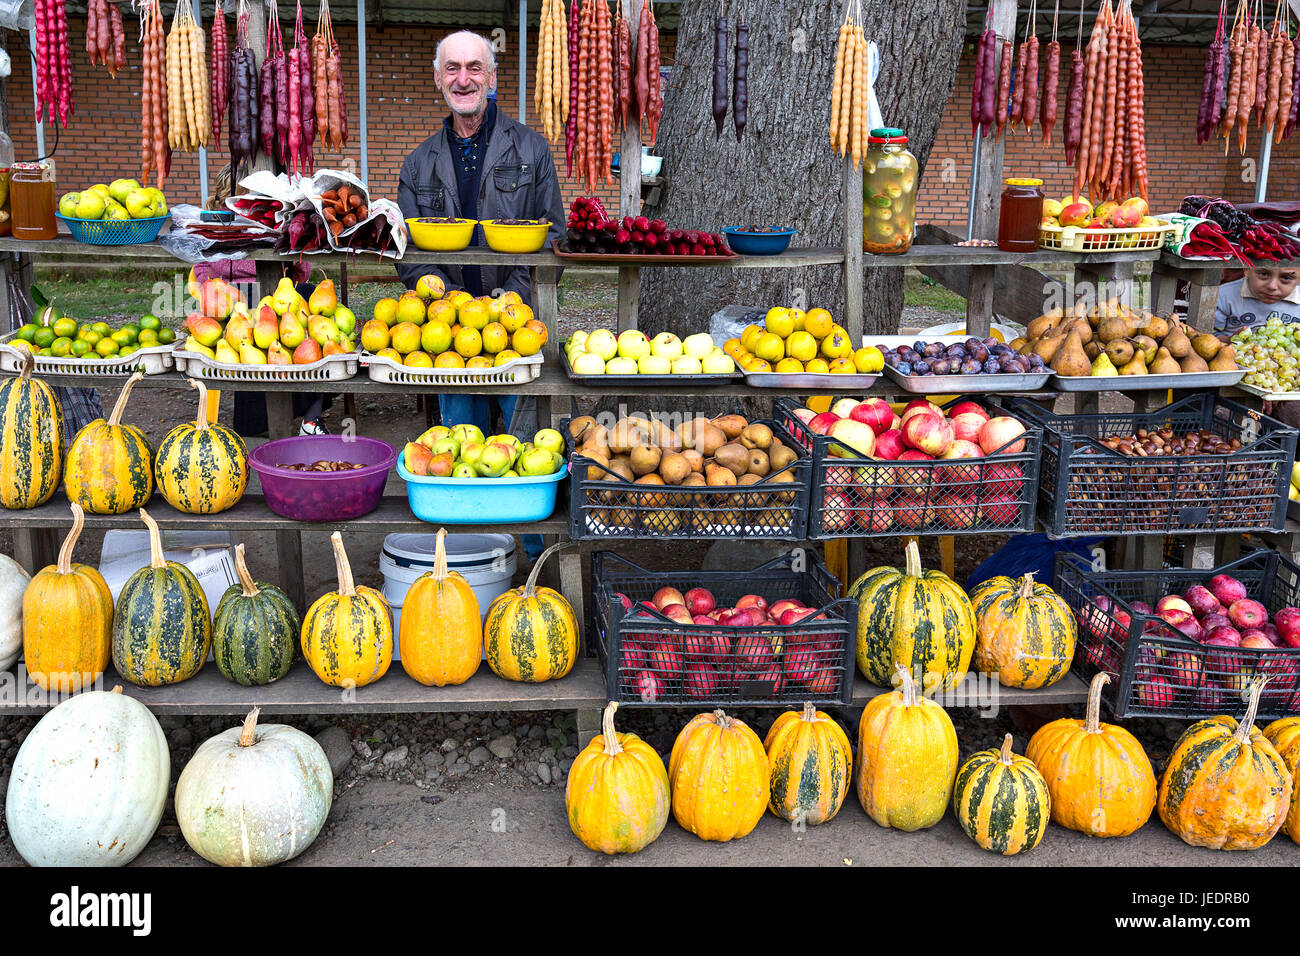 Georgian man and fruit stand, near Batumi, Georgia. Stock Photo